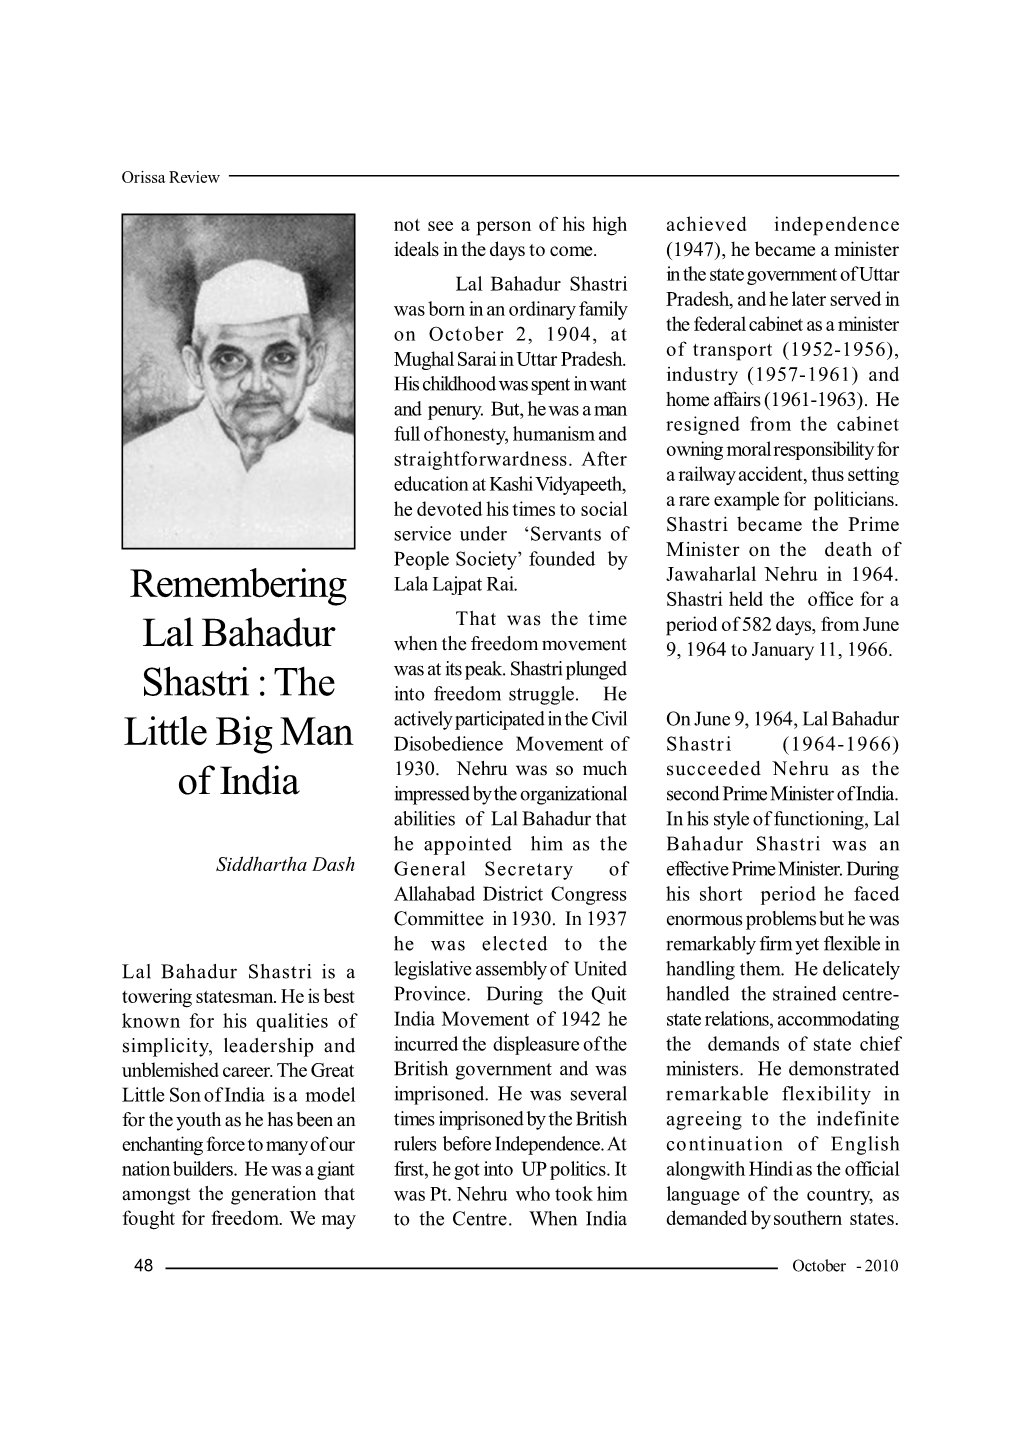 Remembering Lal Bahadur Shastri : the Little Big Man of India